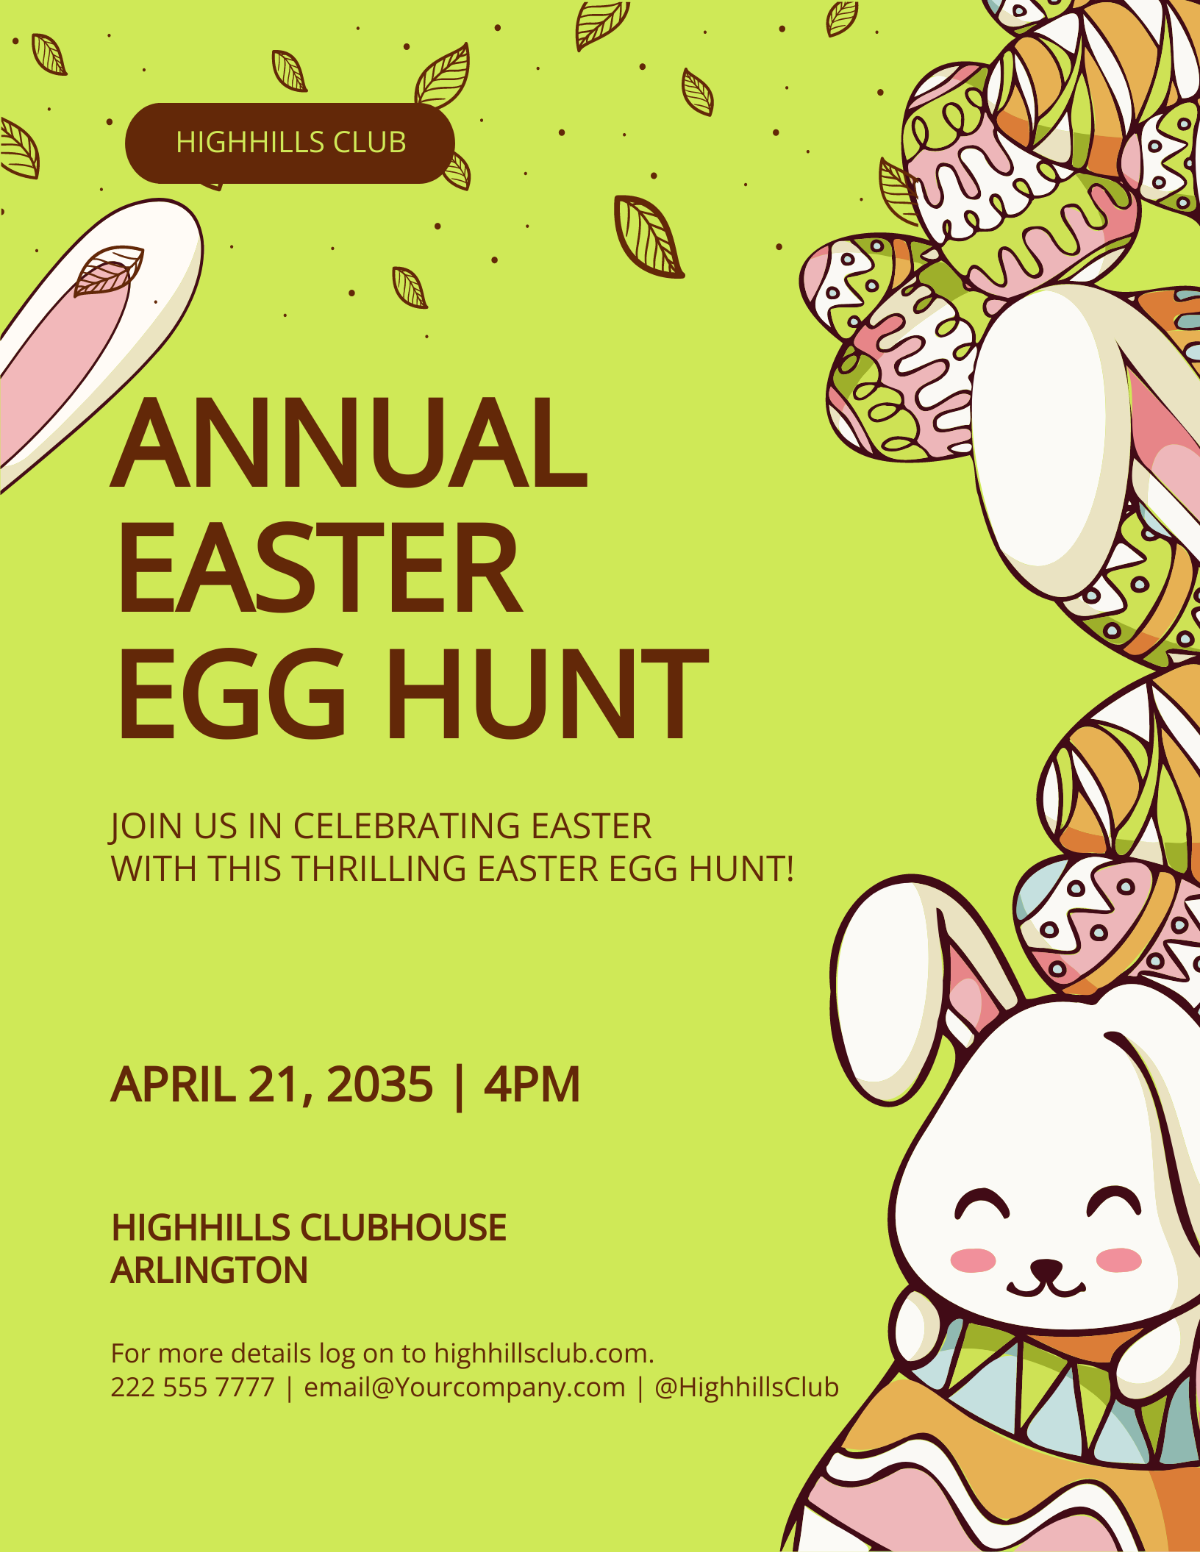 Easter Egg Hunt Party Flyer Template